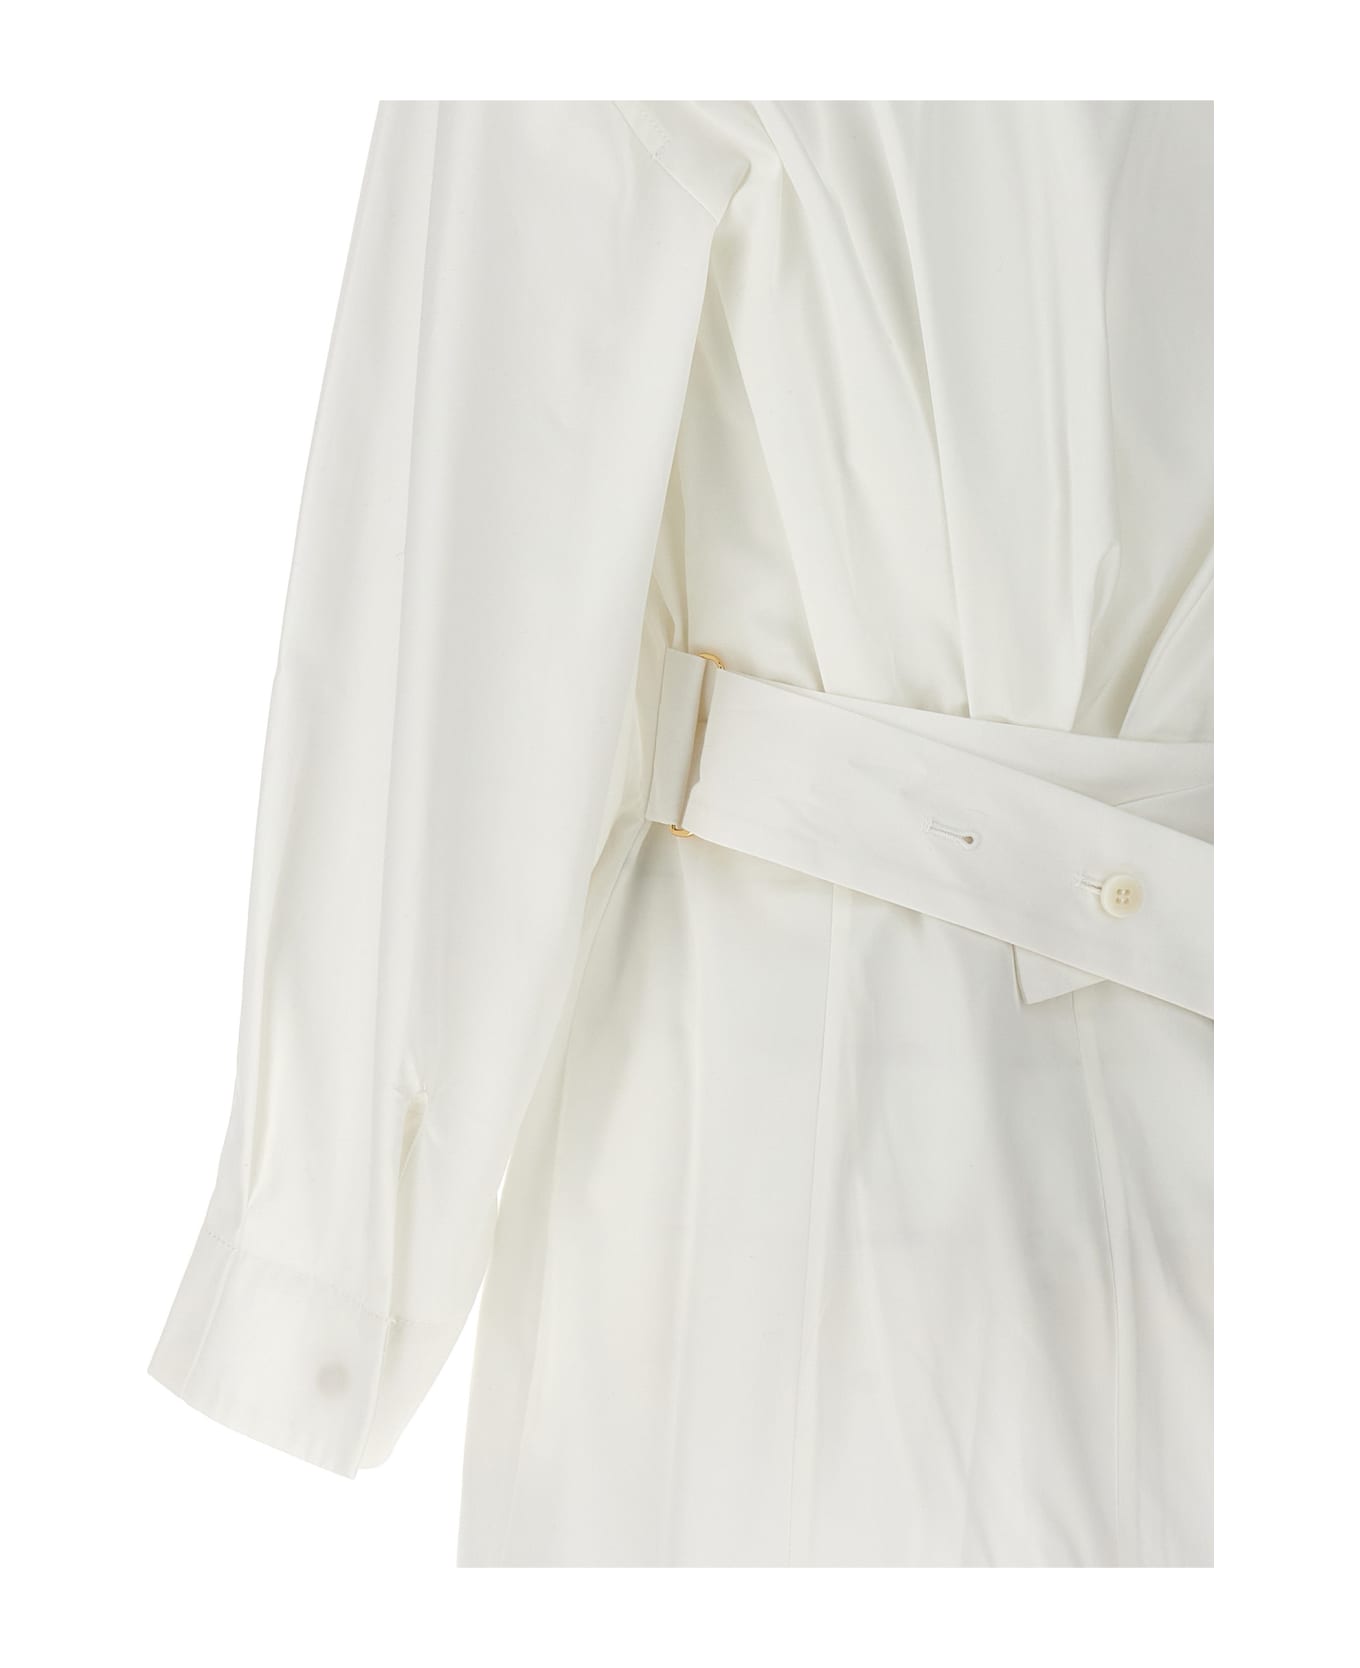 Jacquemus La Mini Robe Chemise Dress - White